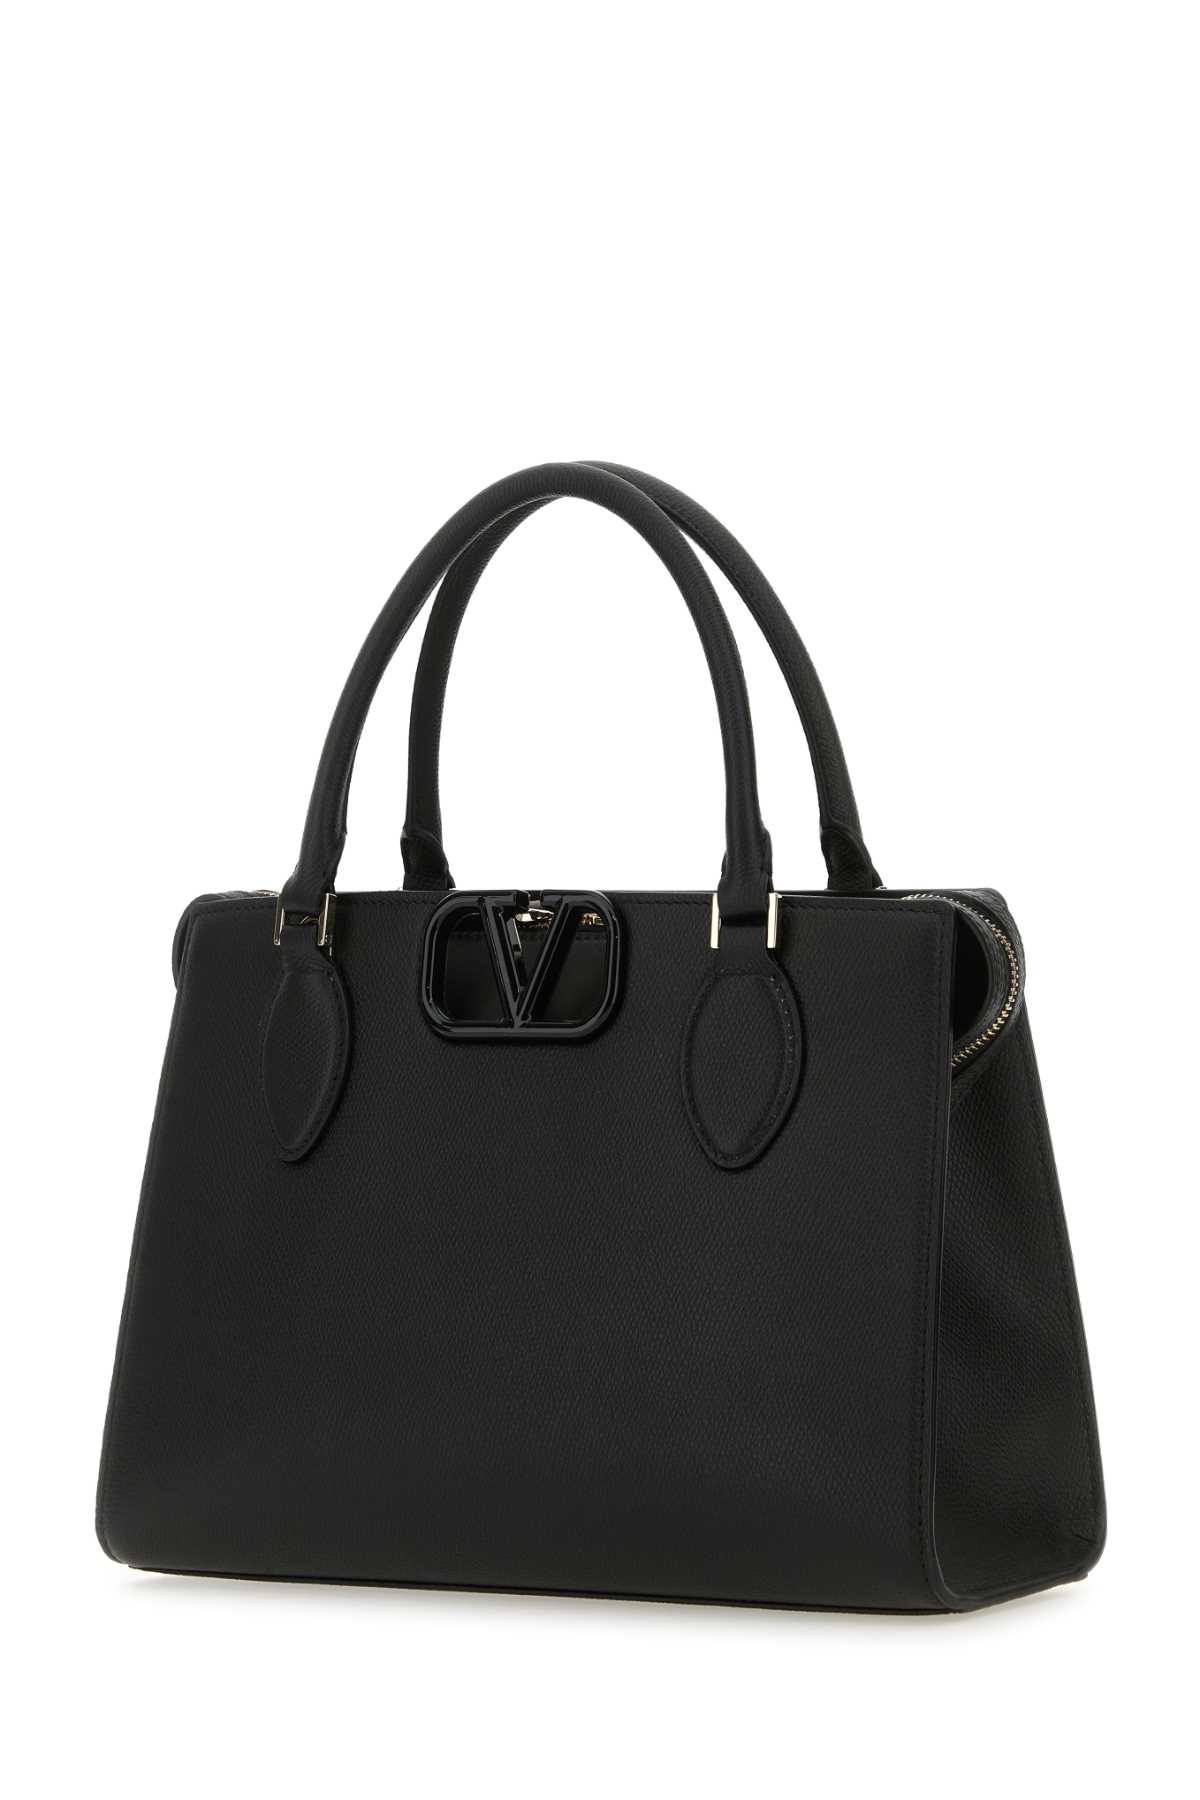 Valentino Garavani Black Leather Vlogo Handbag